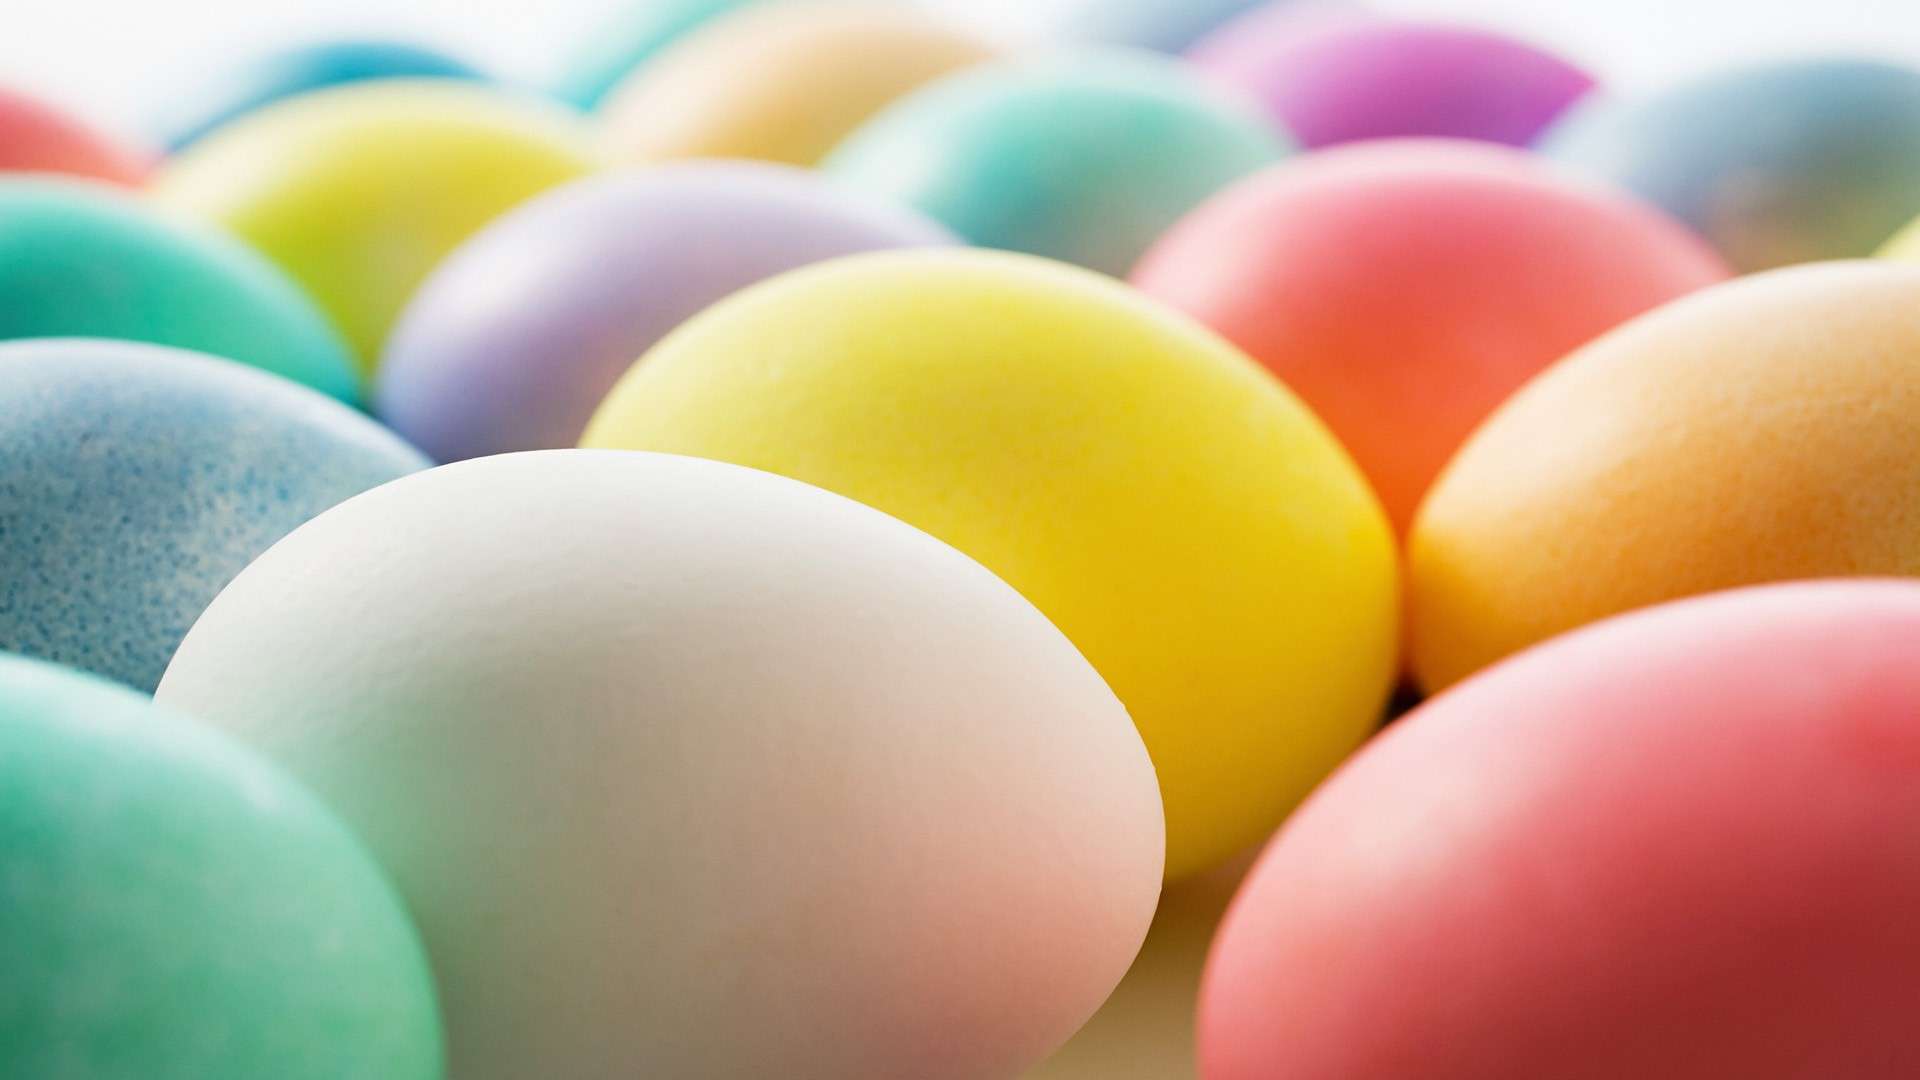 Minimalistic Colored Eggs HD Wallpaper FullHDwpp Full